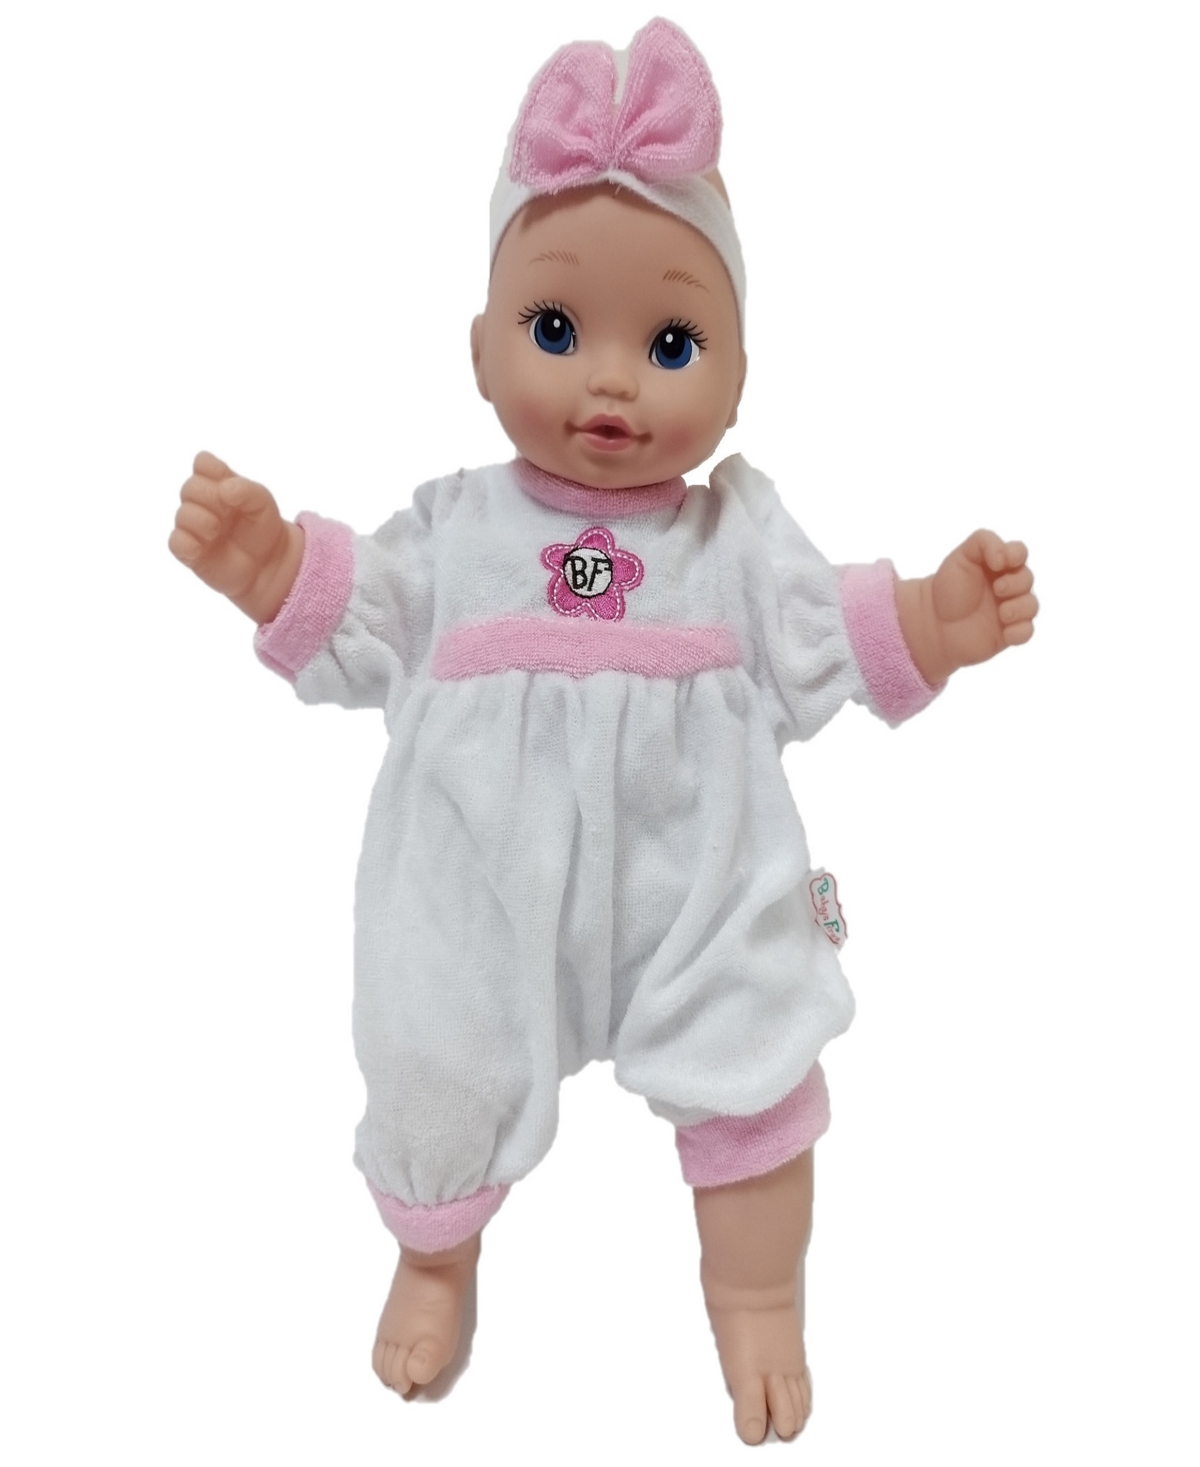 Shop Baby's First By Nemcor 13" Bundle Of Joy Caucasian Baby Doll In Multi